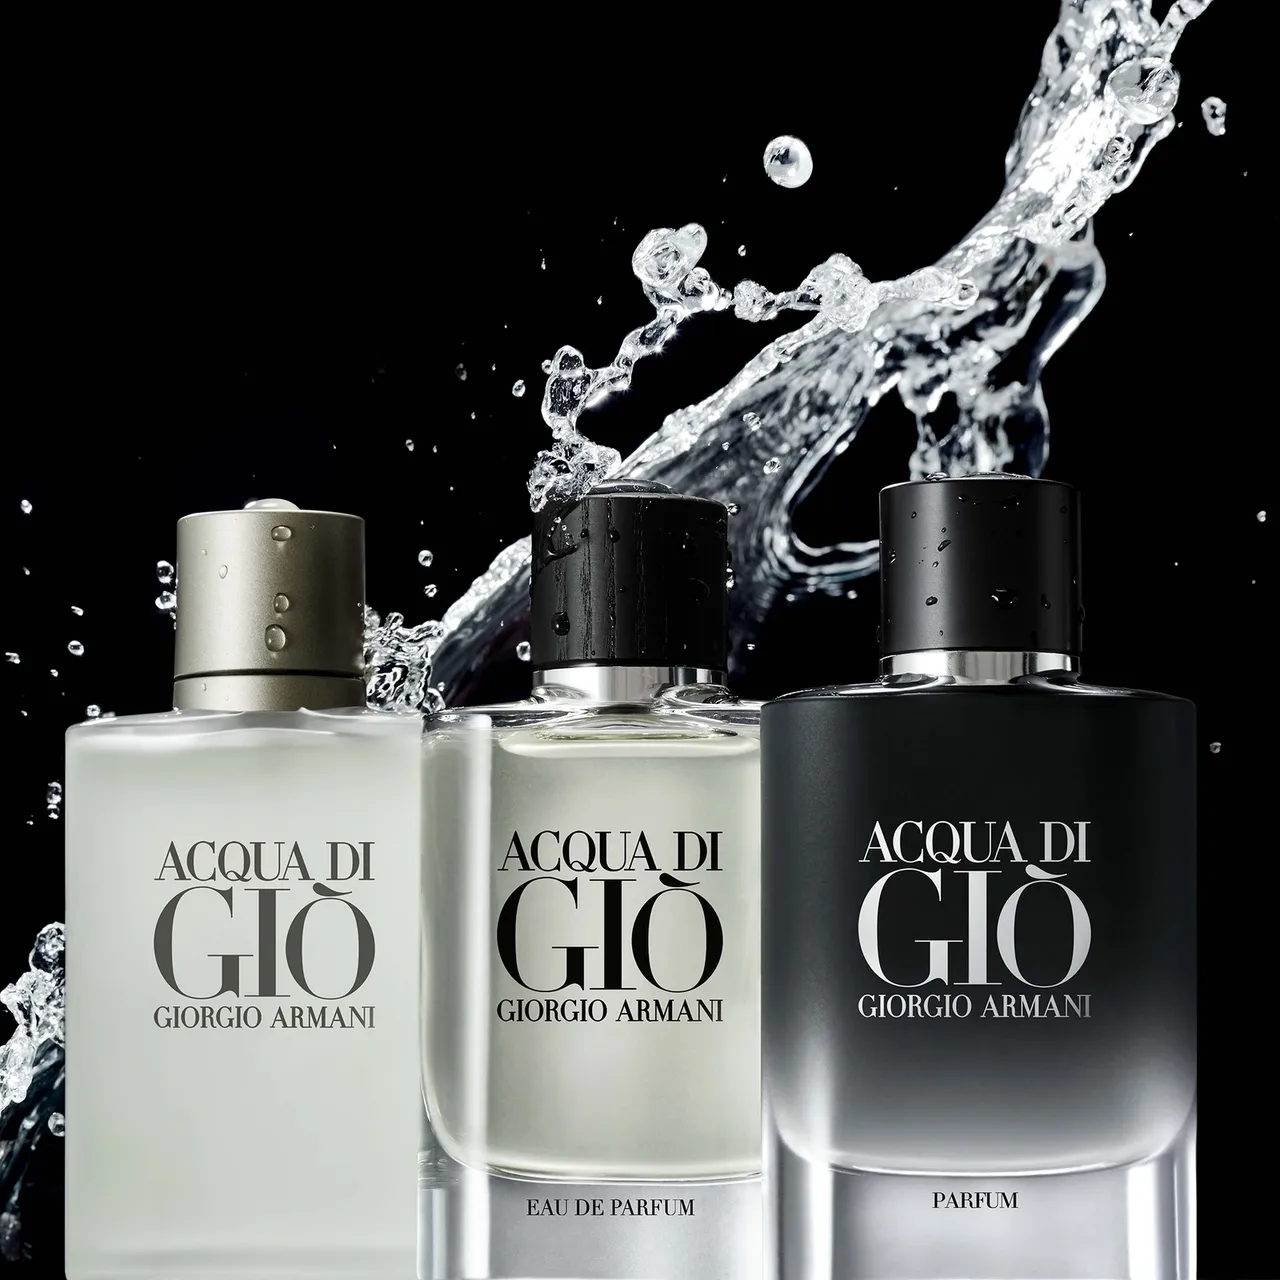 Armani Acqua Di Gio Eau de Parfum 75ml